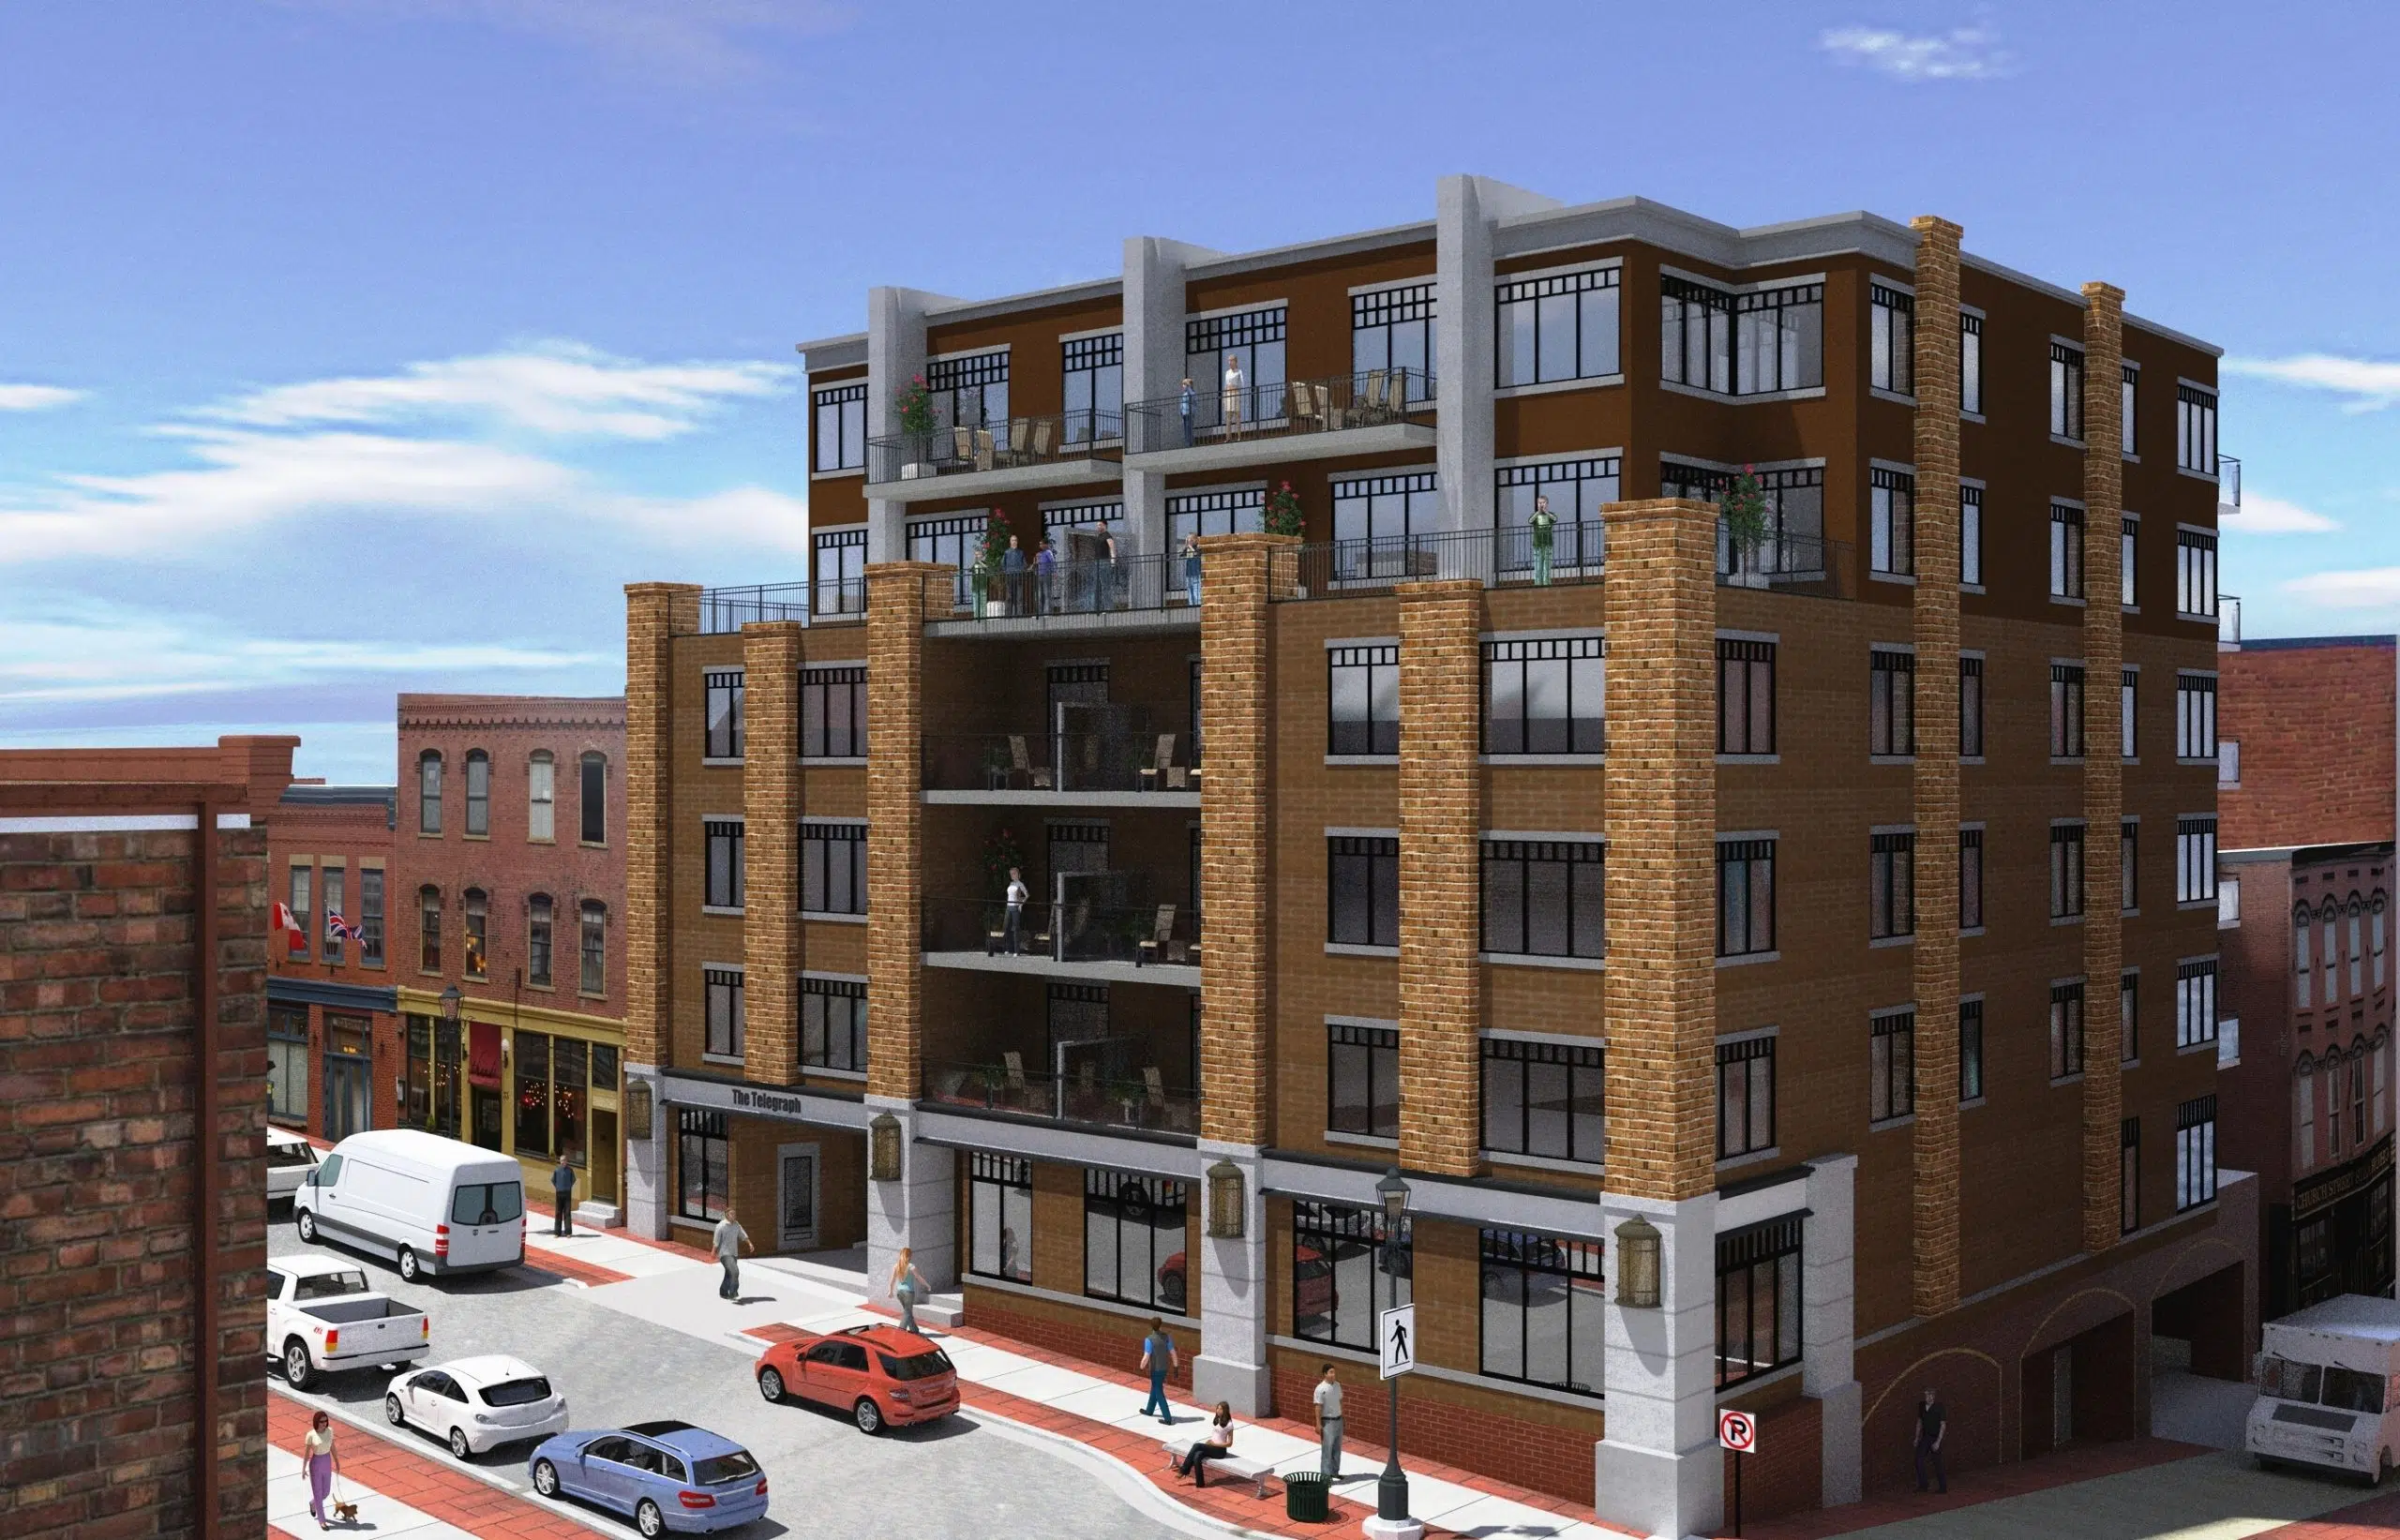 City Surpasses Residential Development Expectations